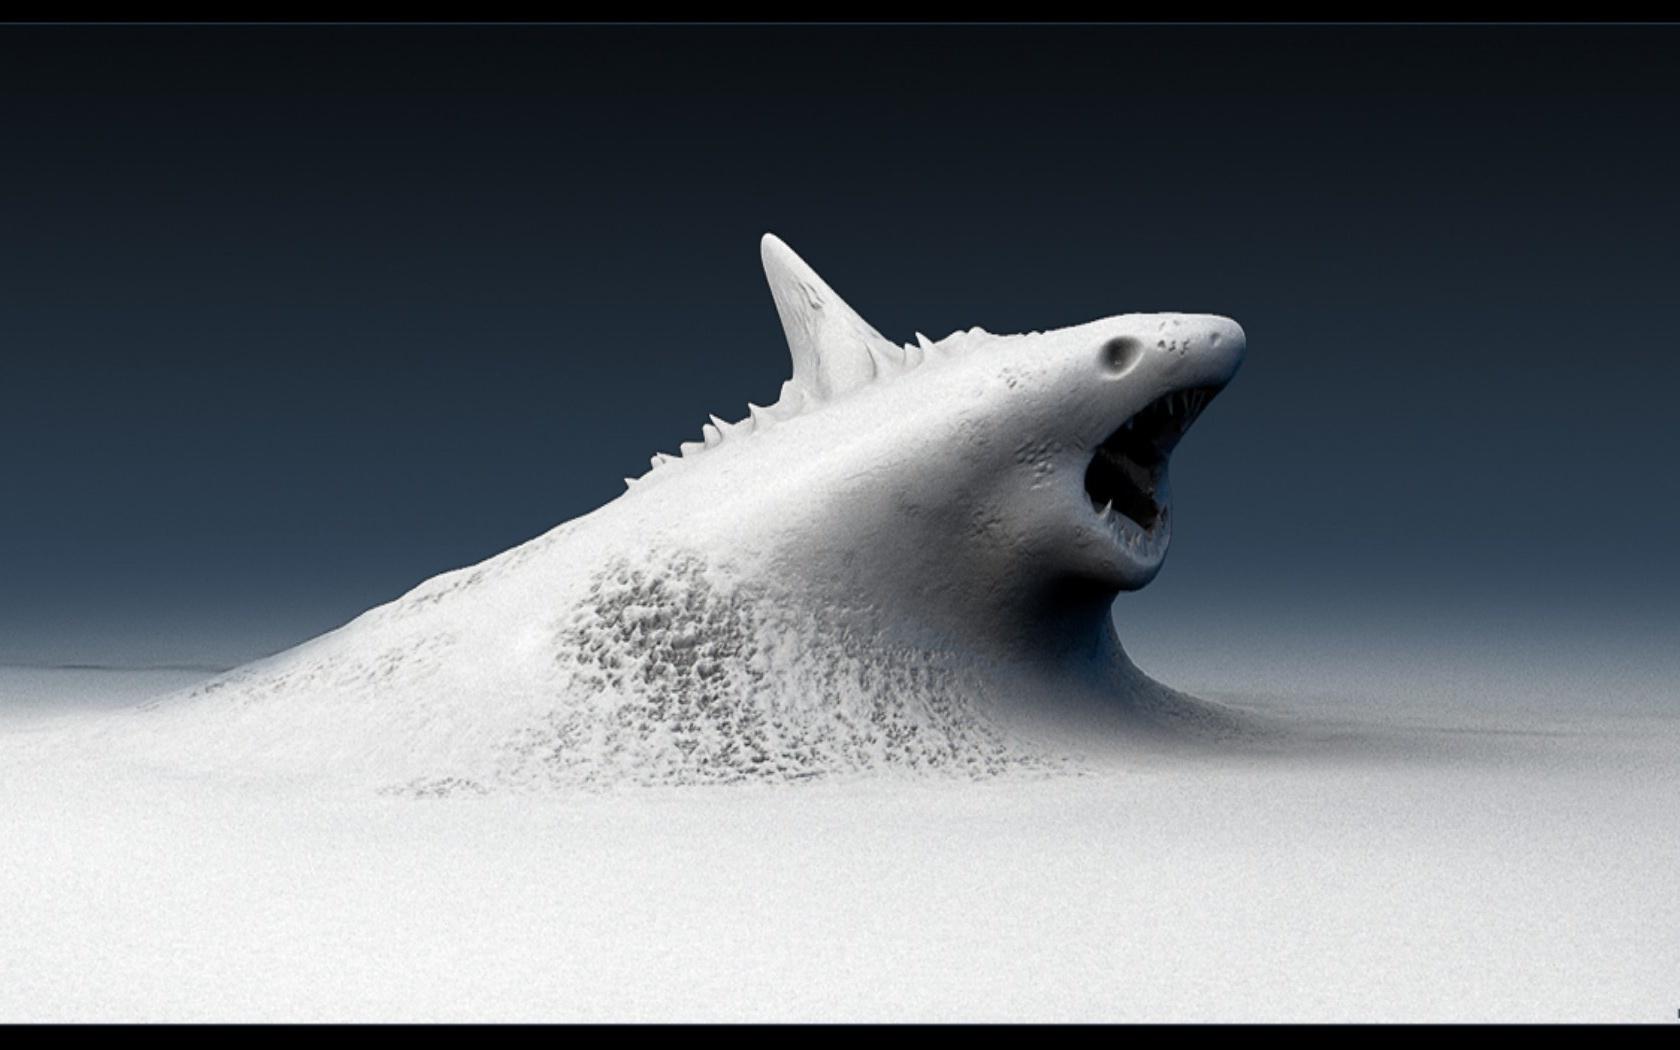 Download wallpaper: shark, wallpaper for desktop, download